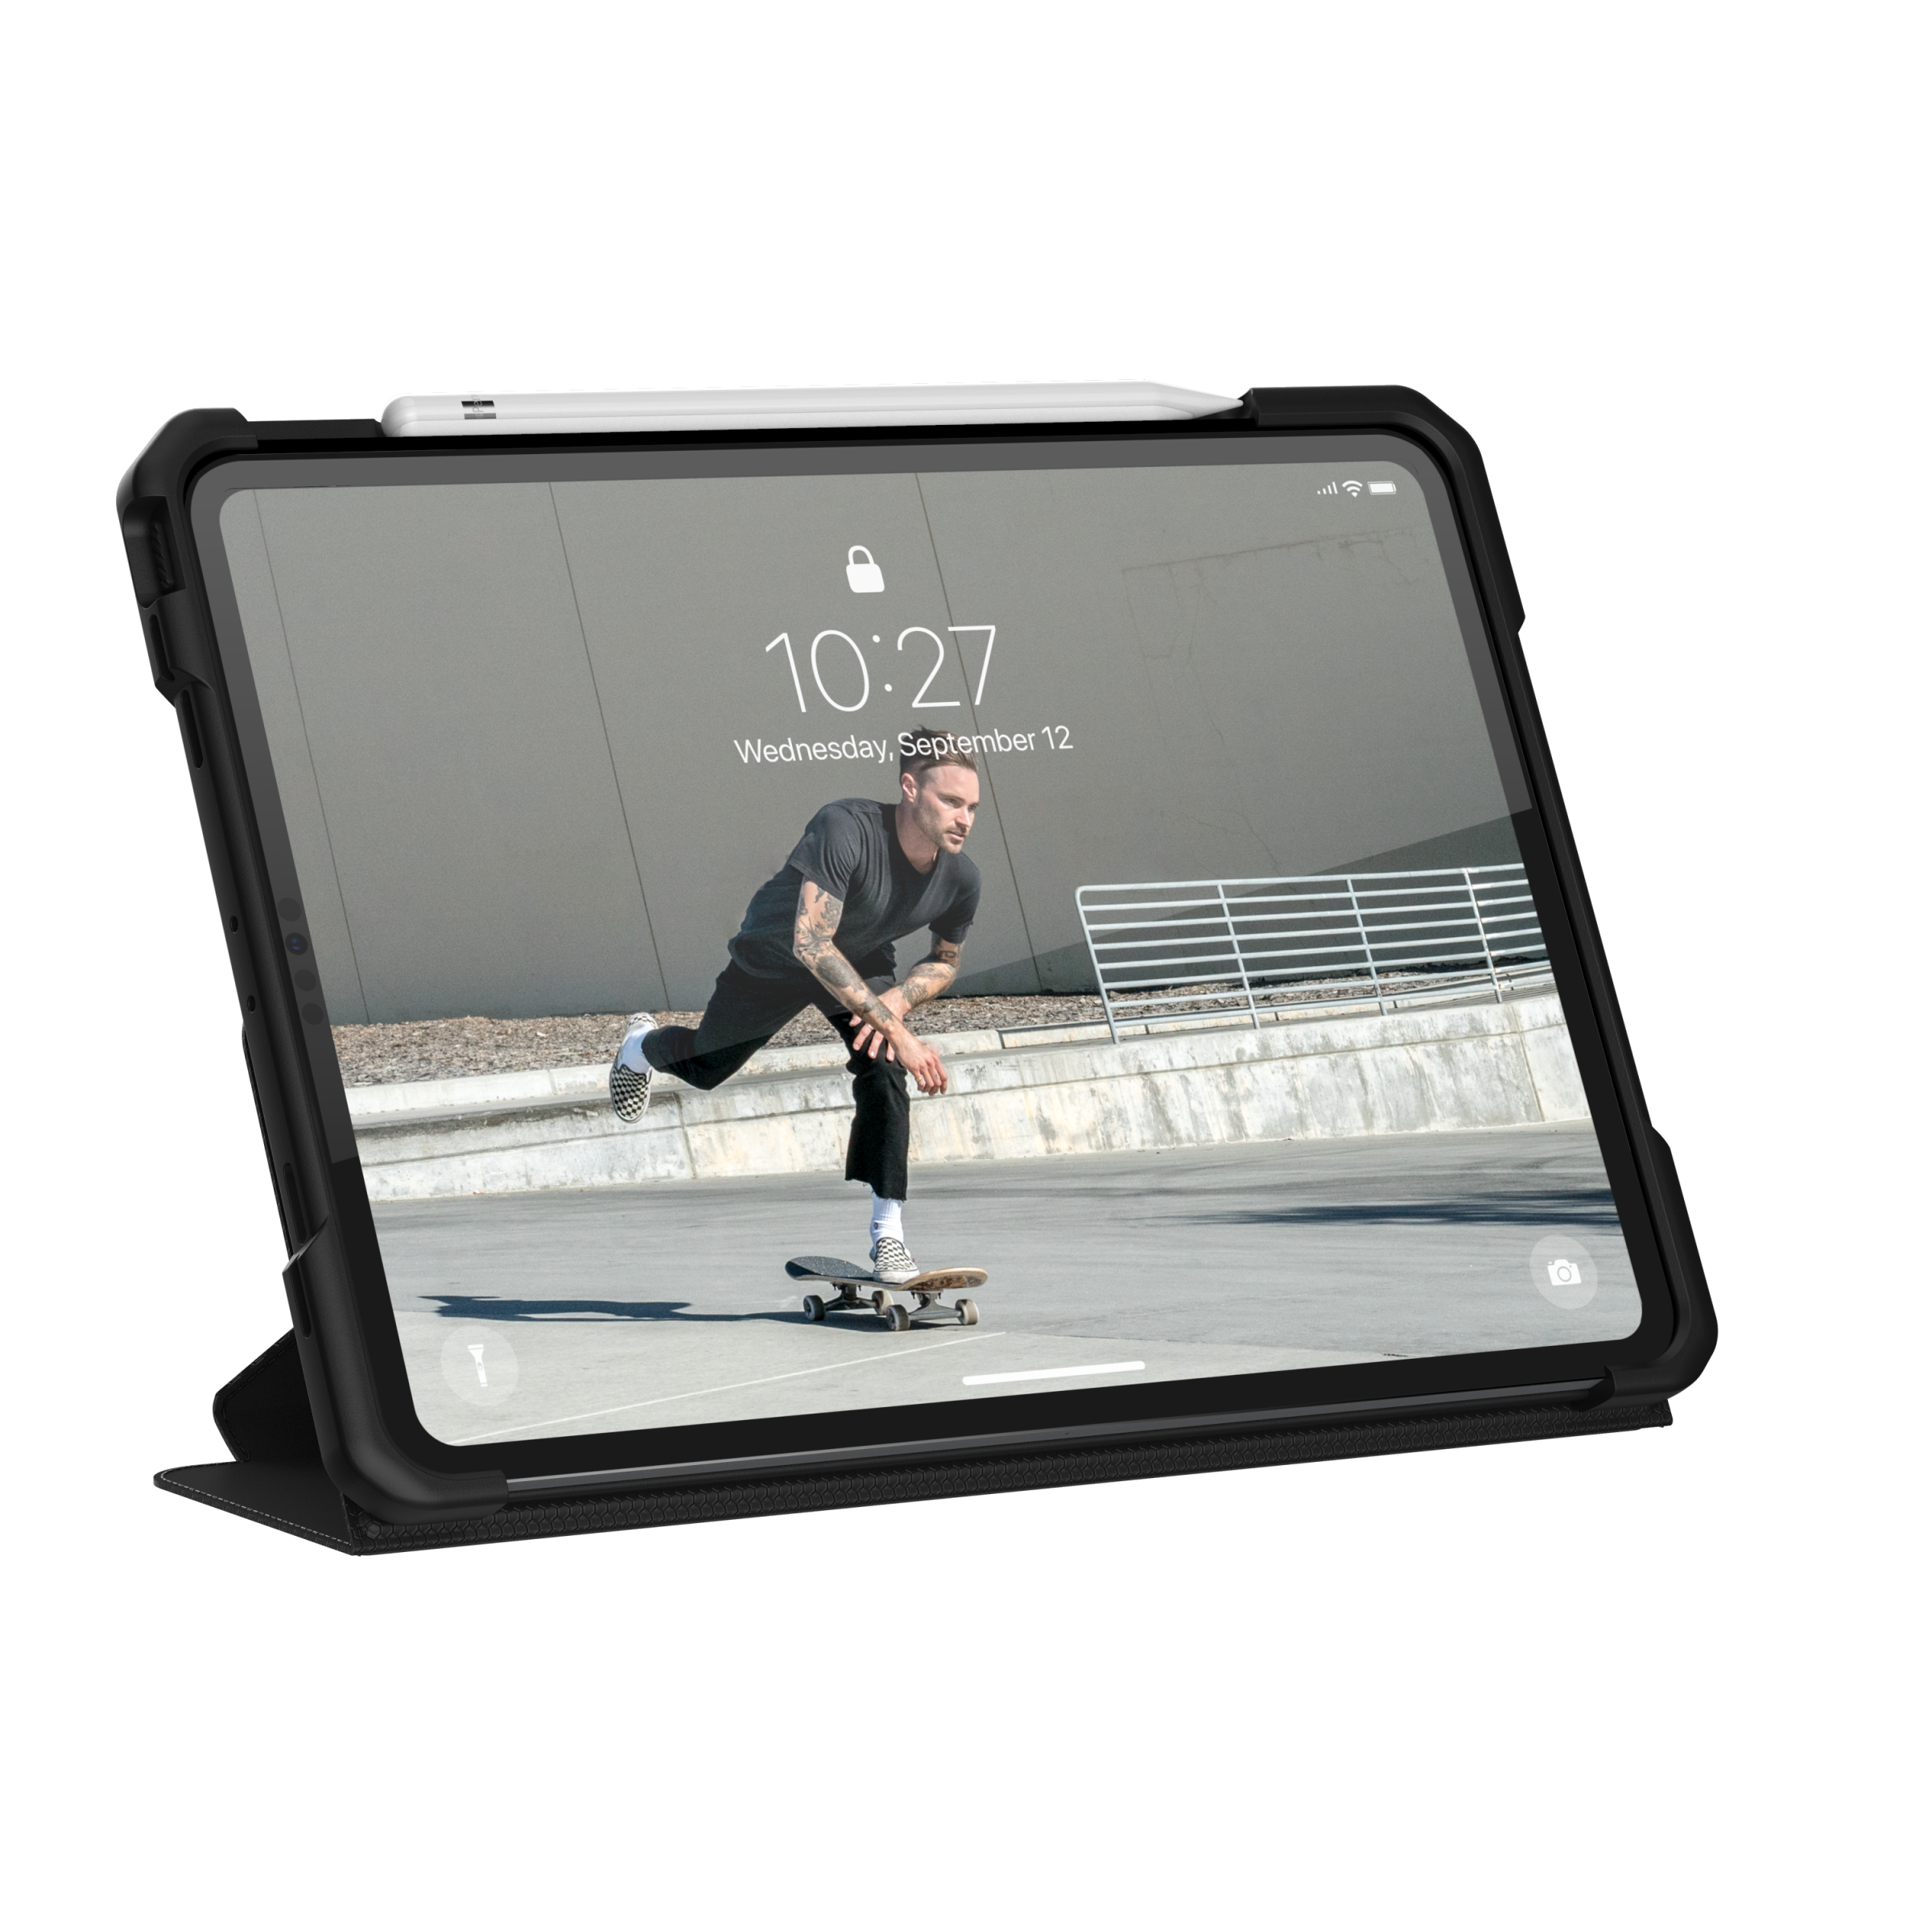 Metropolis Series Case iPad Pro 11 2020 Black